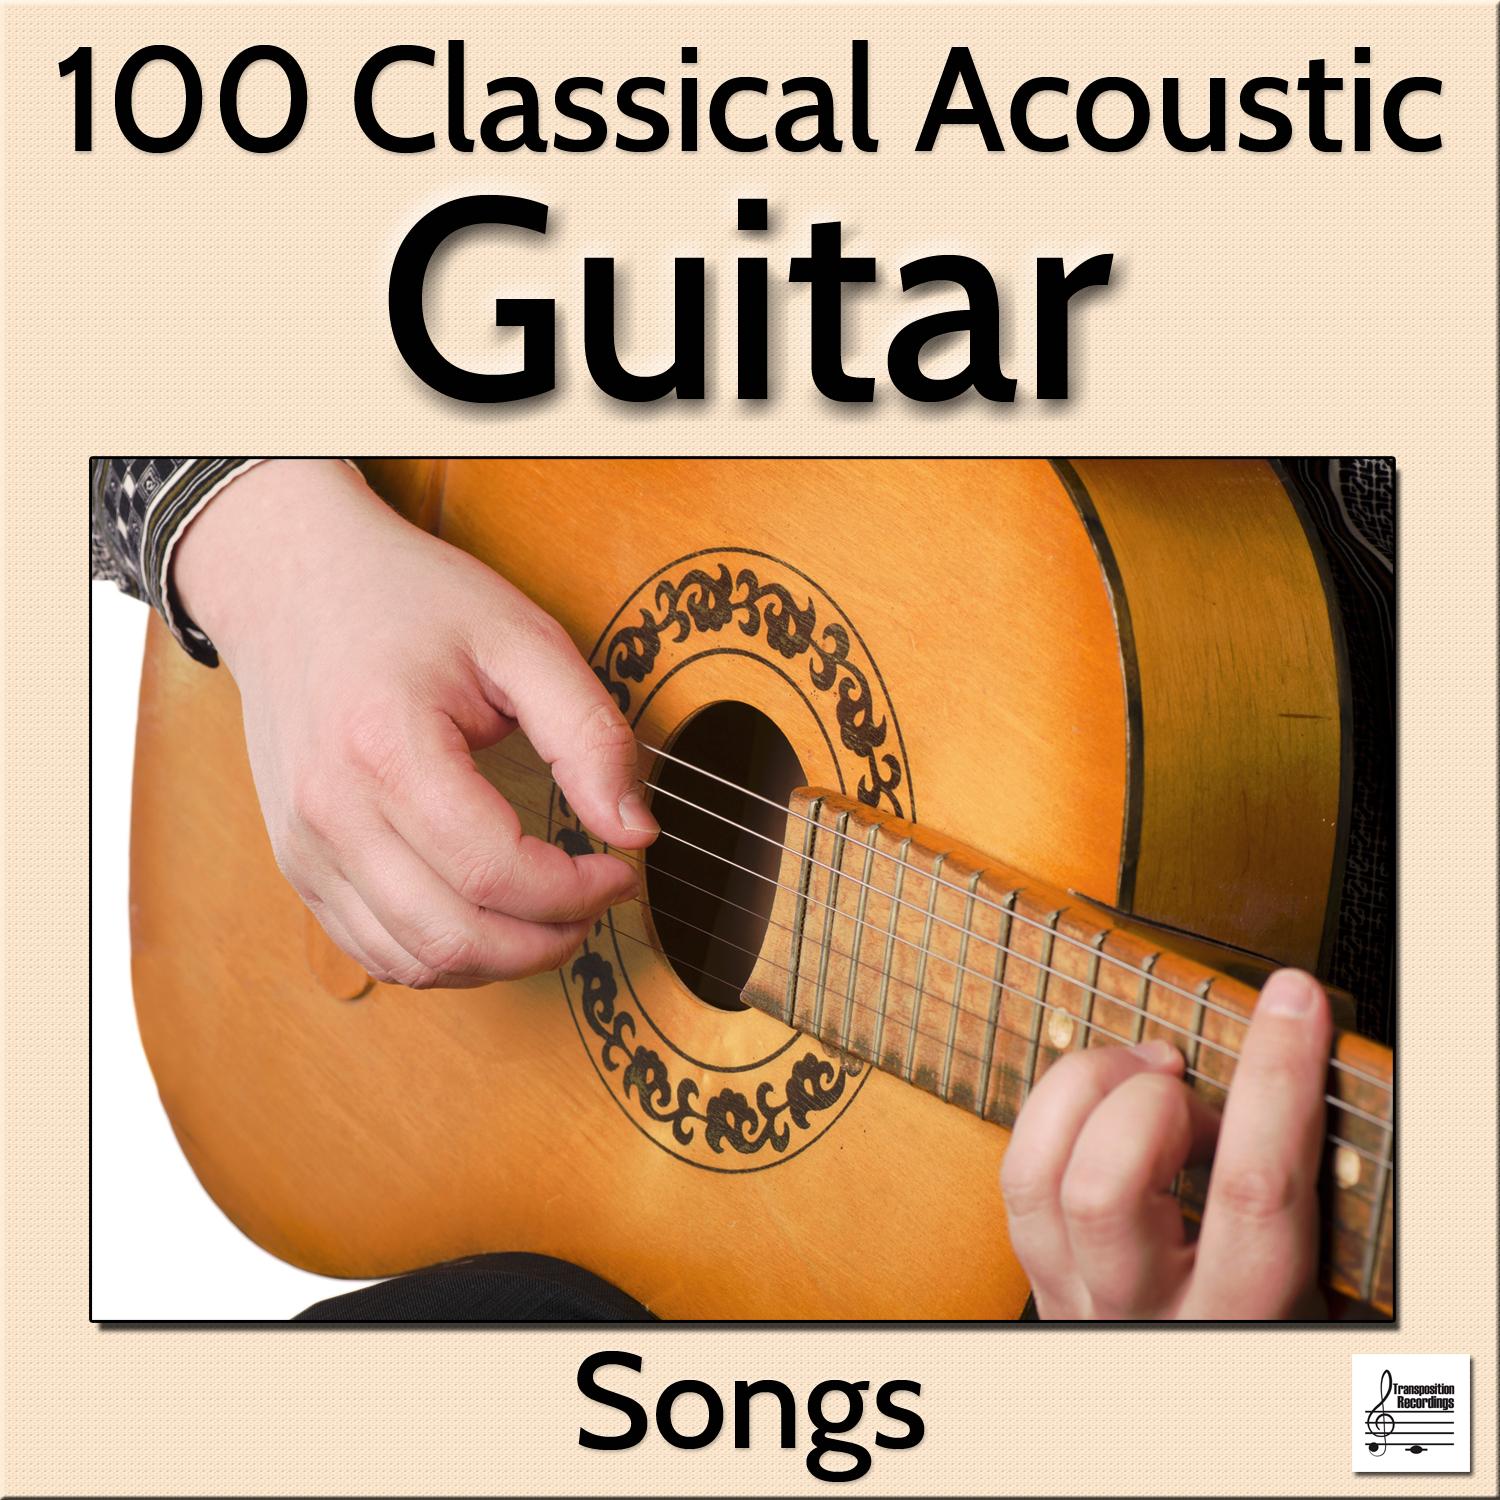 100 Classical Acoustic Guitar Songs